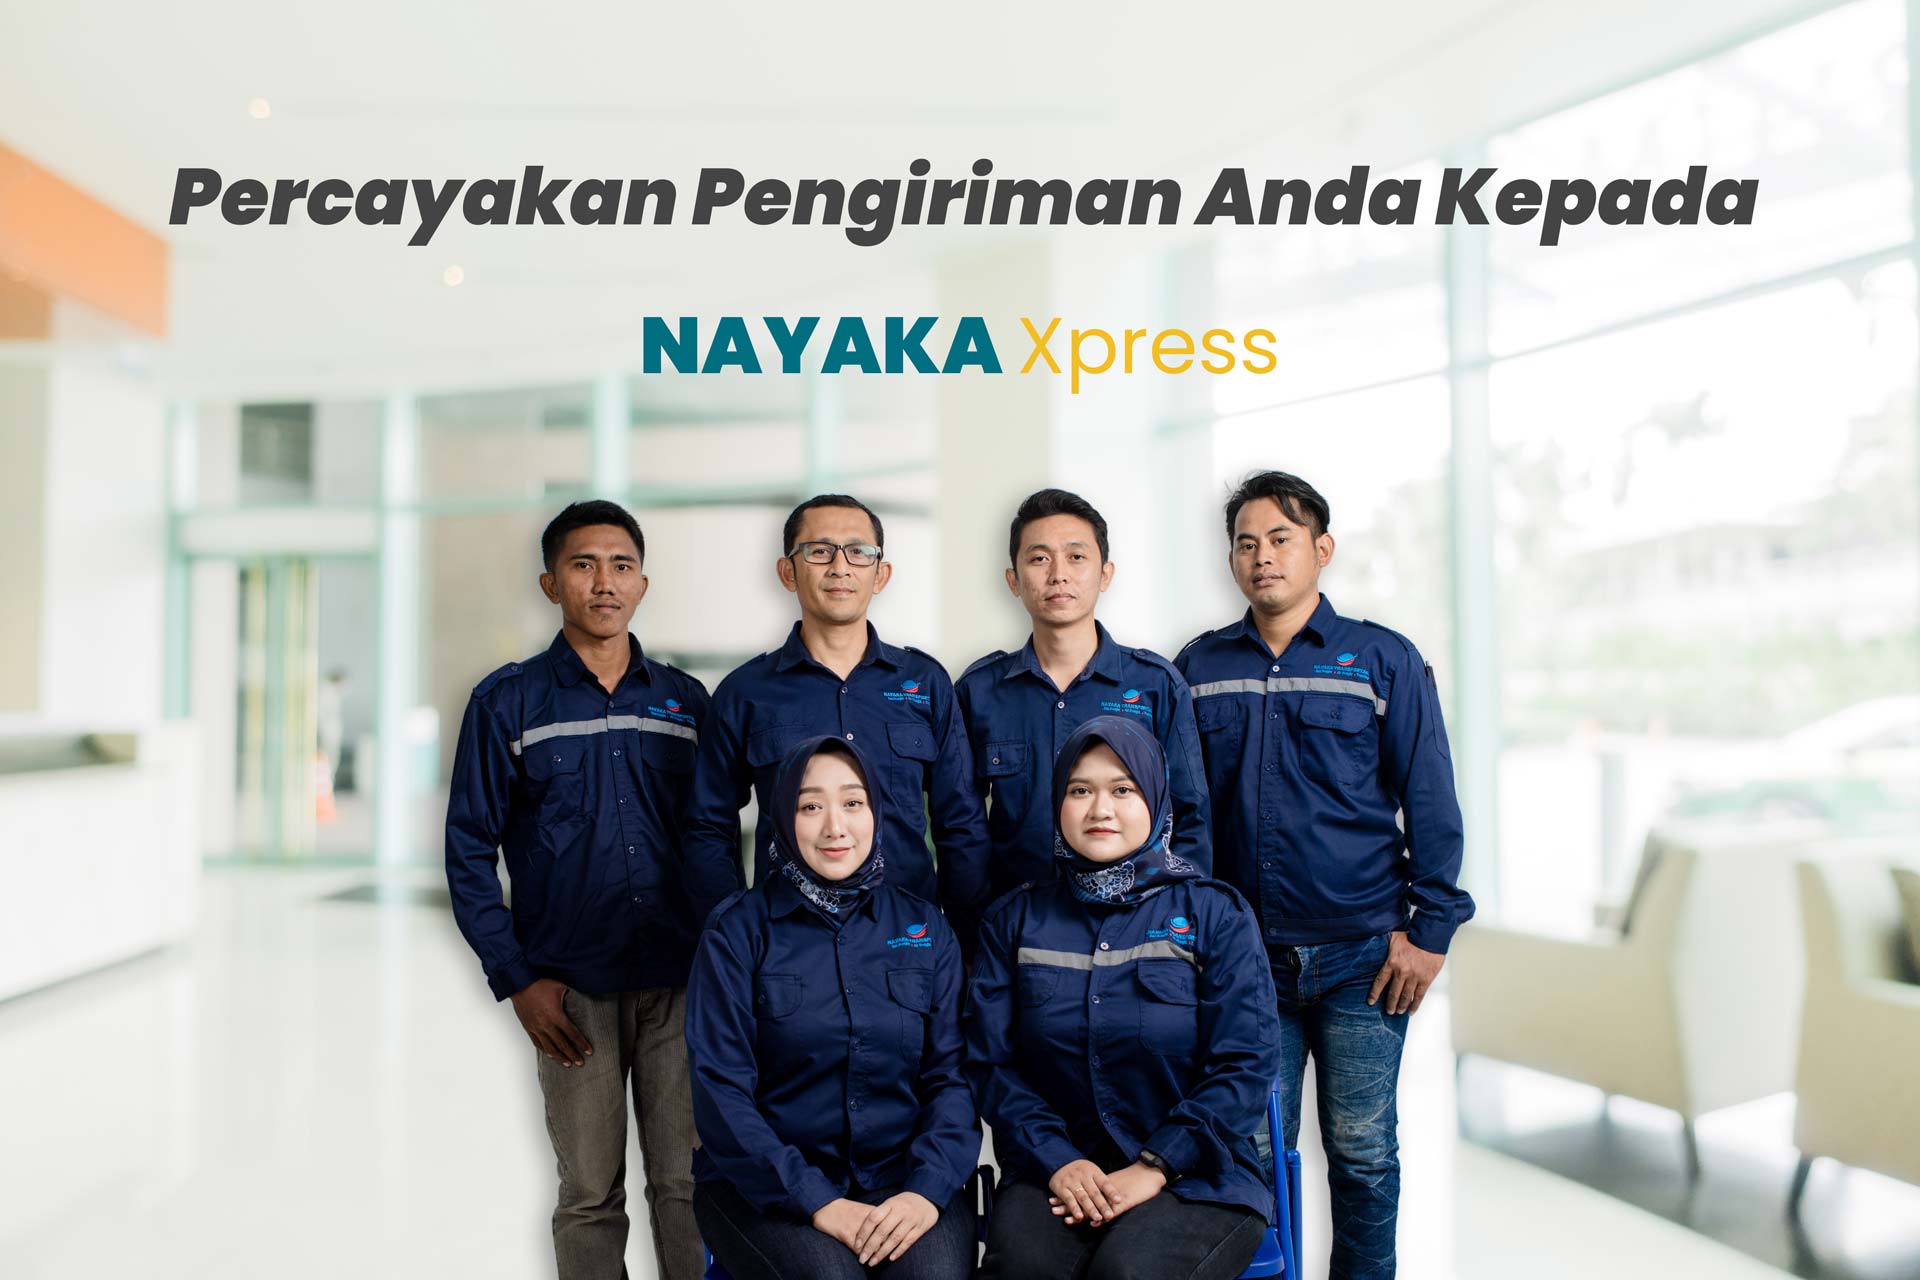 Team NAYAKA Xpress